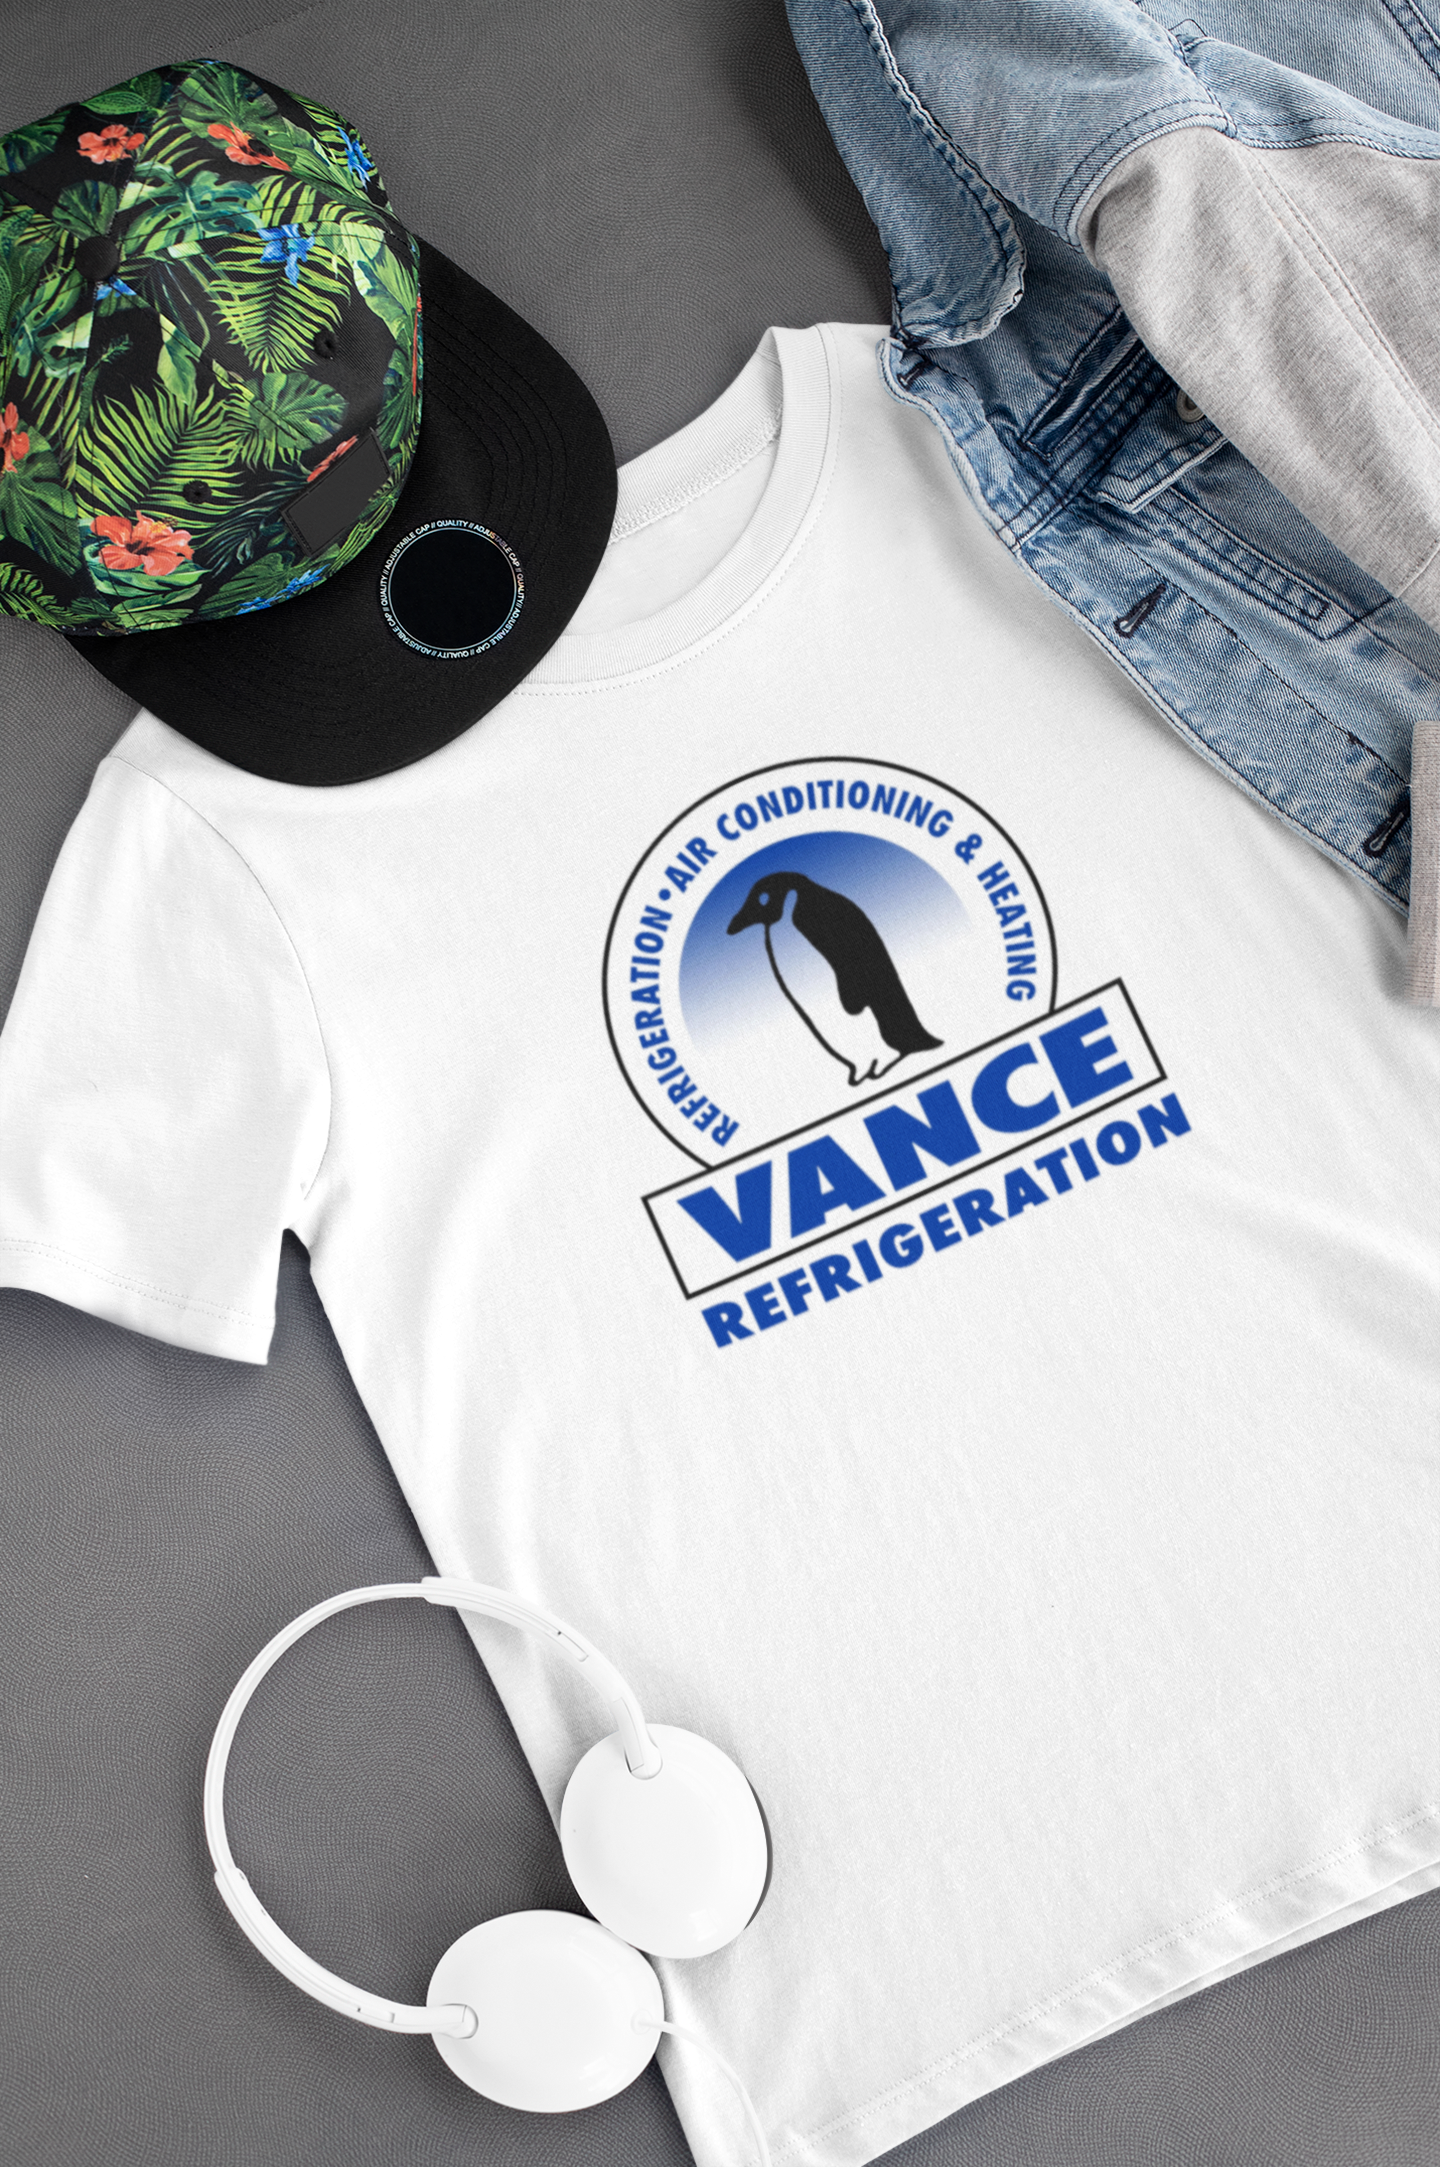 Camiseta "Vance Refrigeration" - The Office - Séries de TV